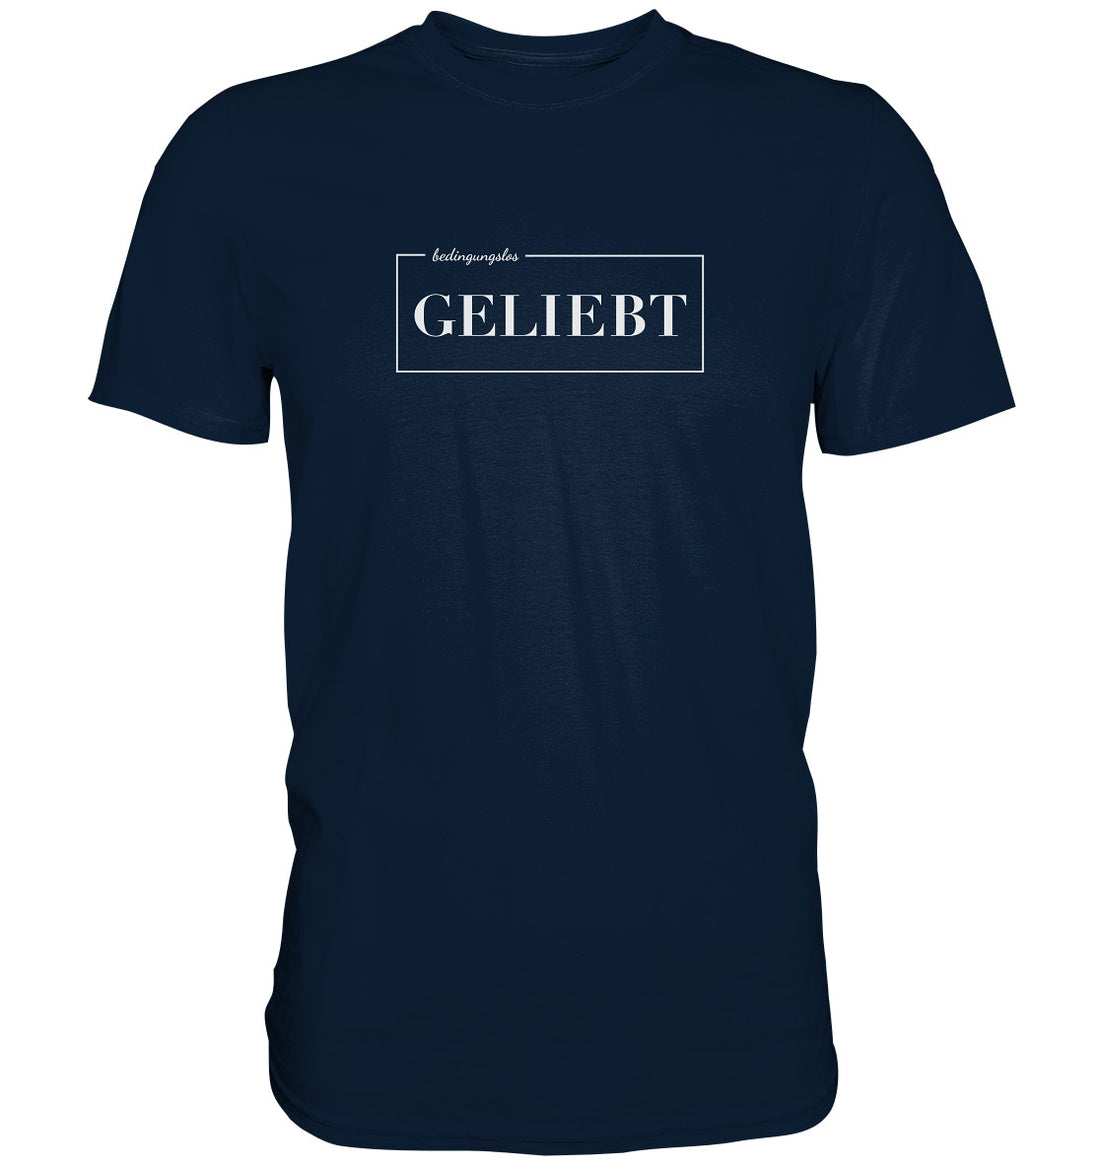 bedingungslos GELIEBT - Premium Shirt